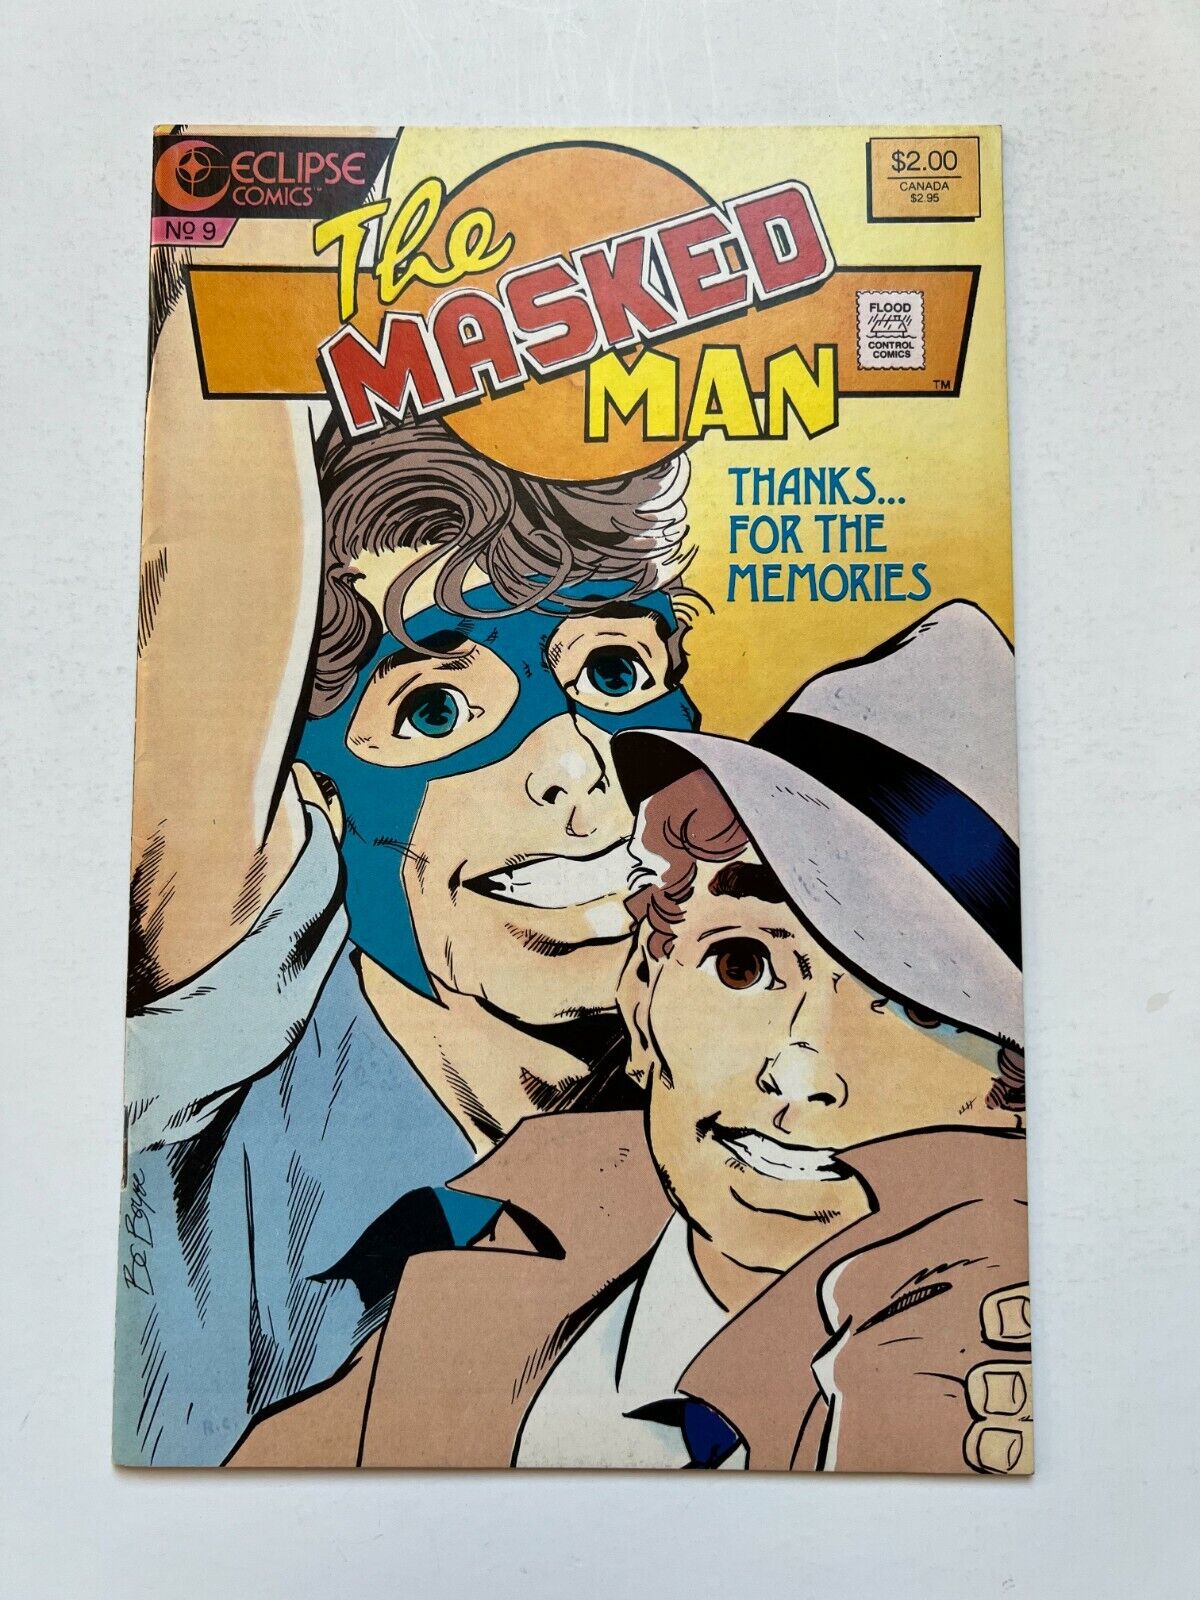 The Masked Man #9 (Eclipse Comics, 1986) VF